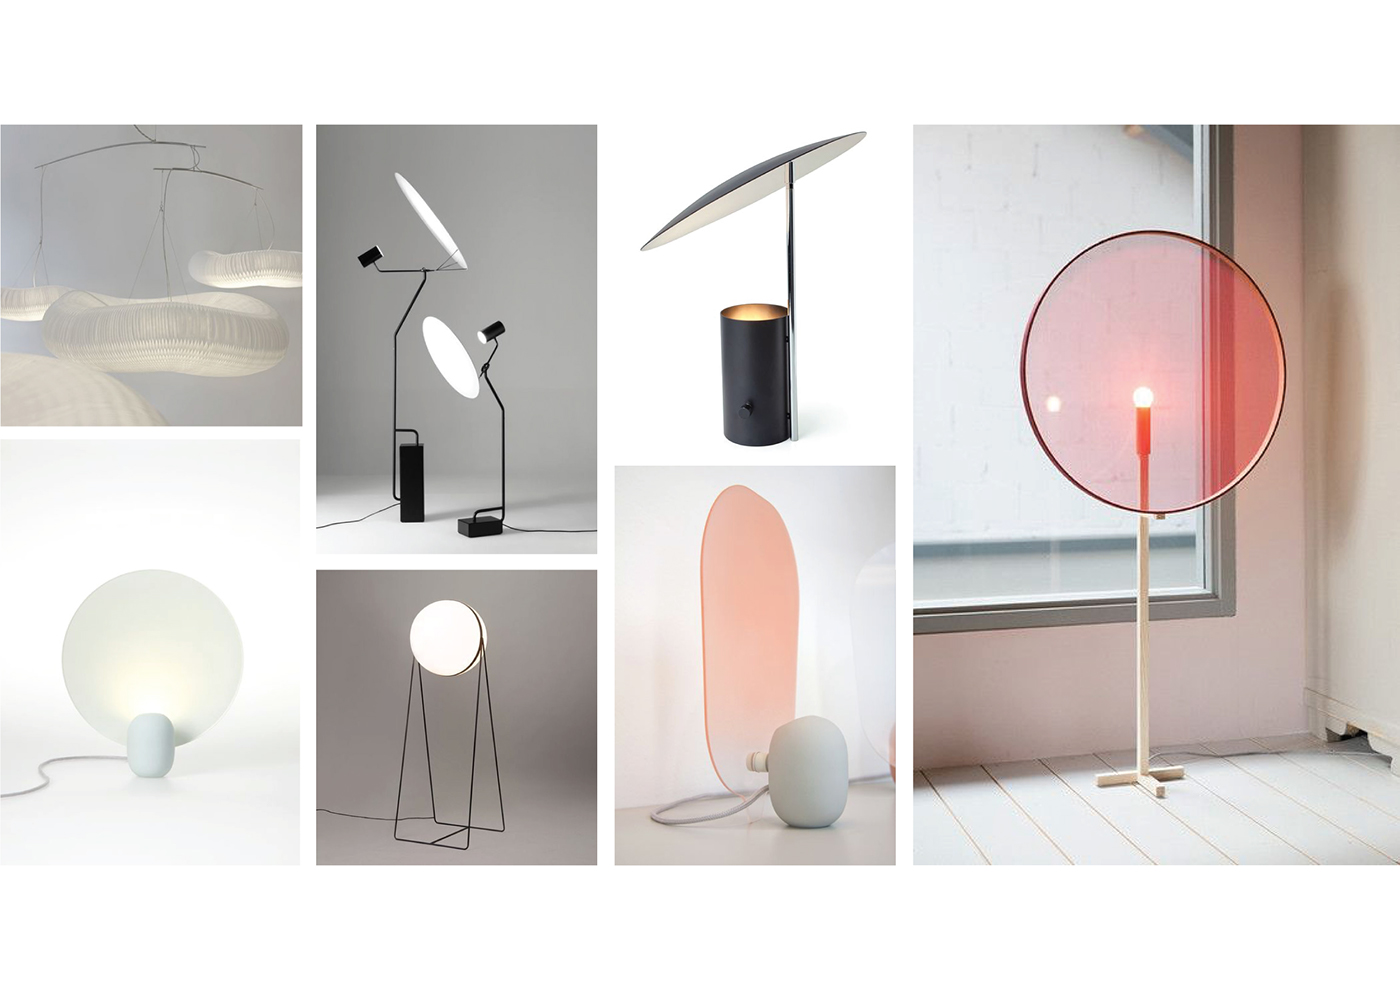 luminaire light floor lamp Ceiling lamp Lamp fabric simplicity Minimalism product family contemporary